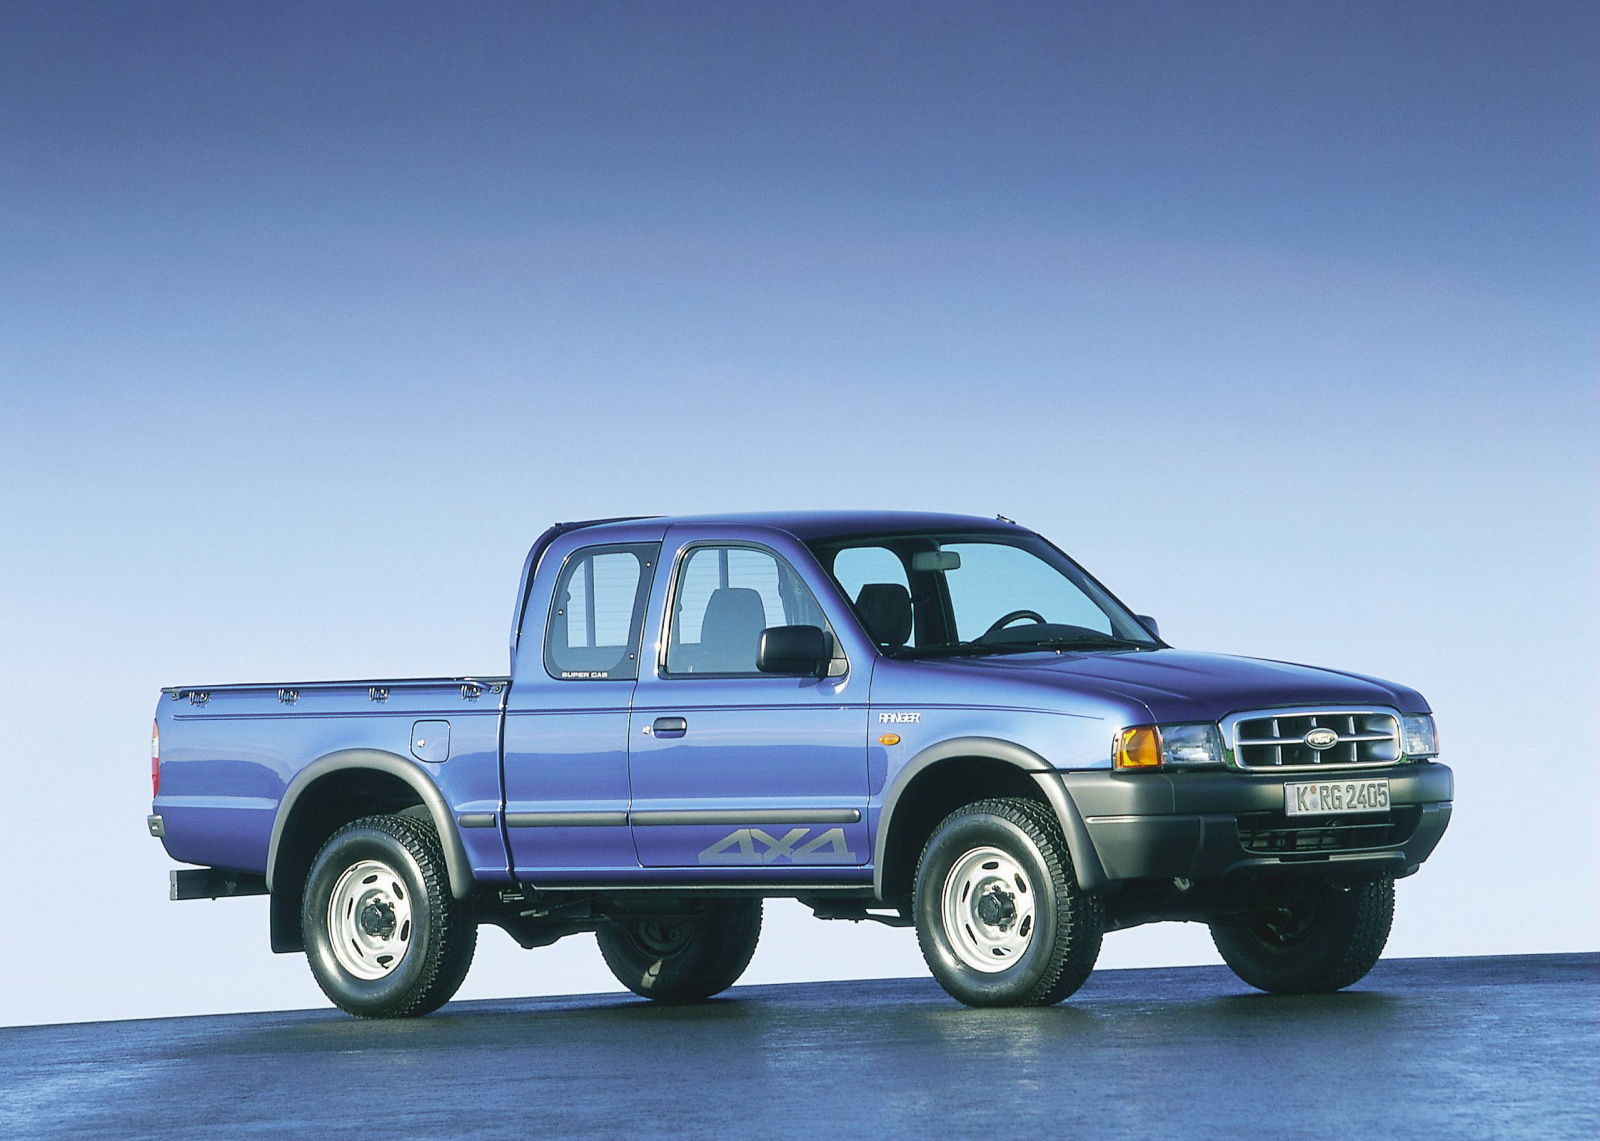 Ford Ranger (1999) - Foto eines Ford Nutzfahrzeug-Modells